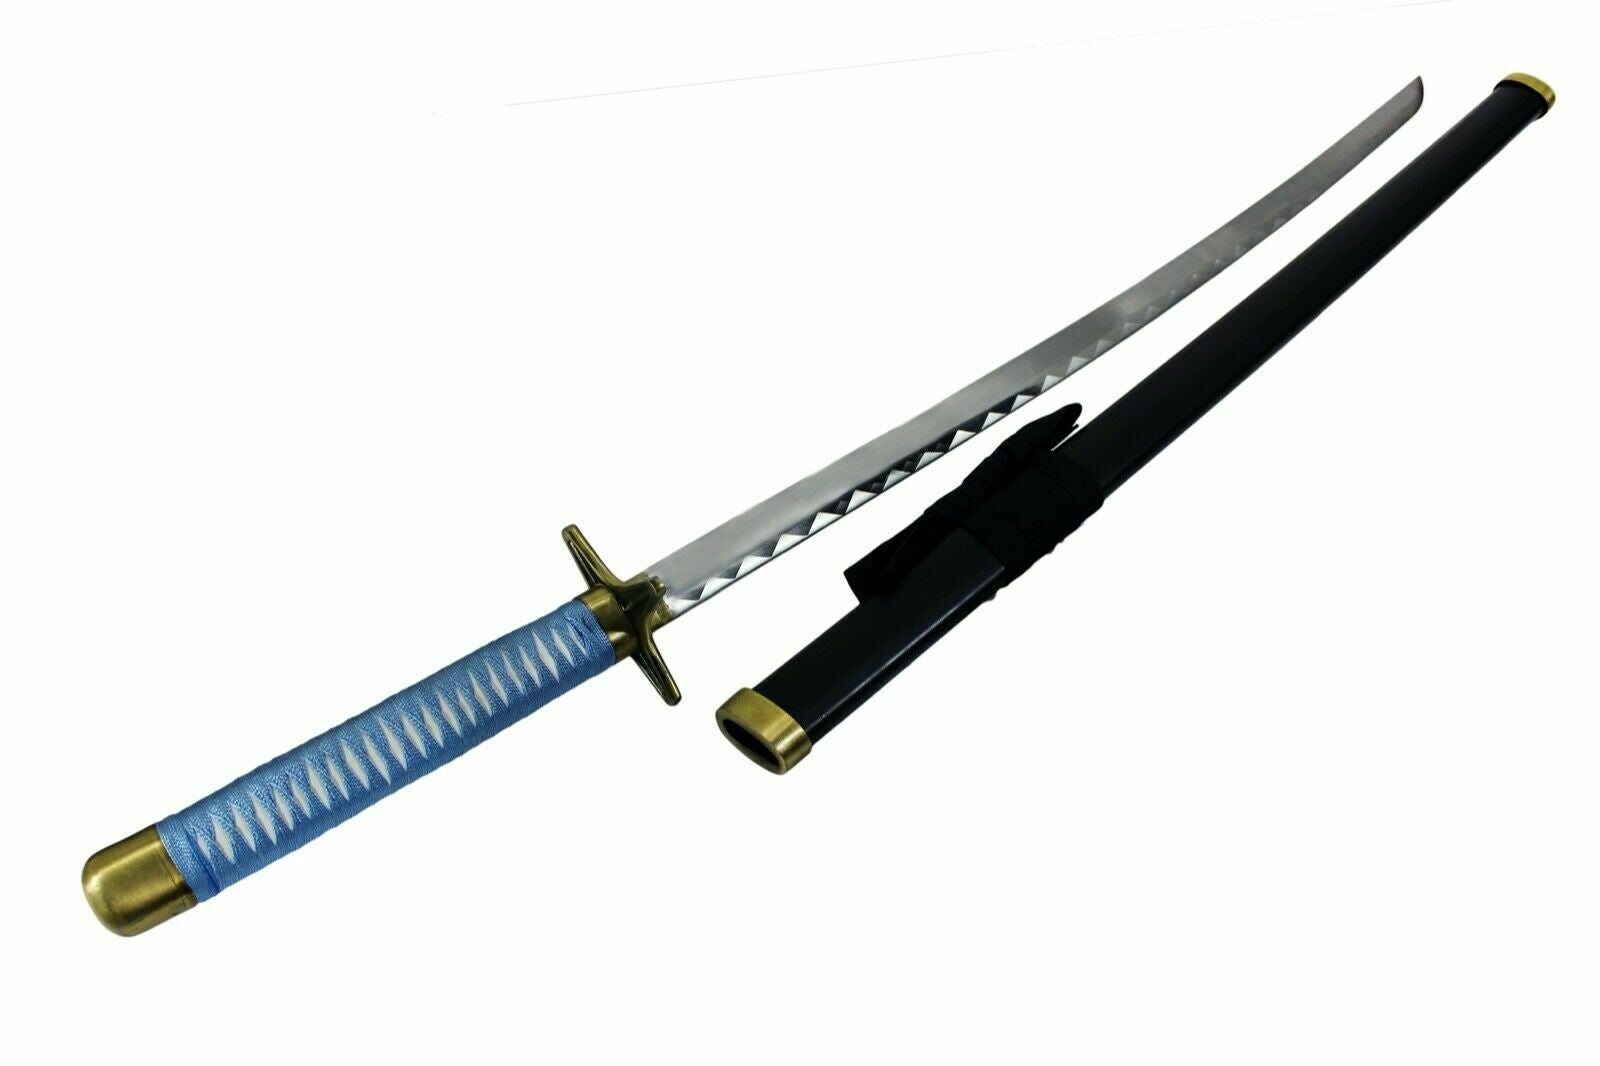 Anime Aikawa Star Shaped Sword | Japanese Blades